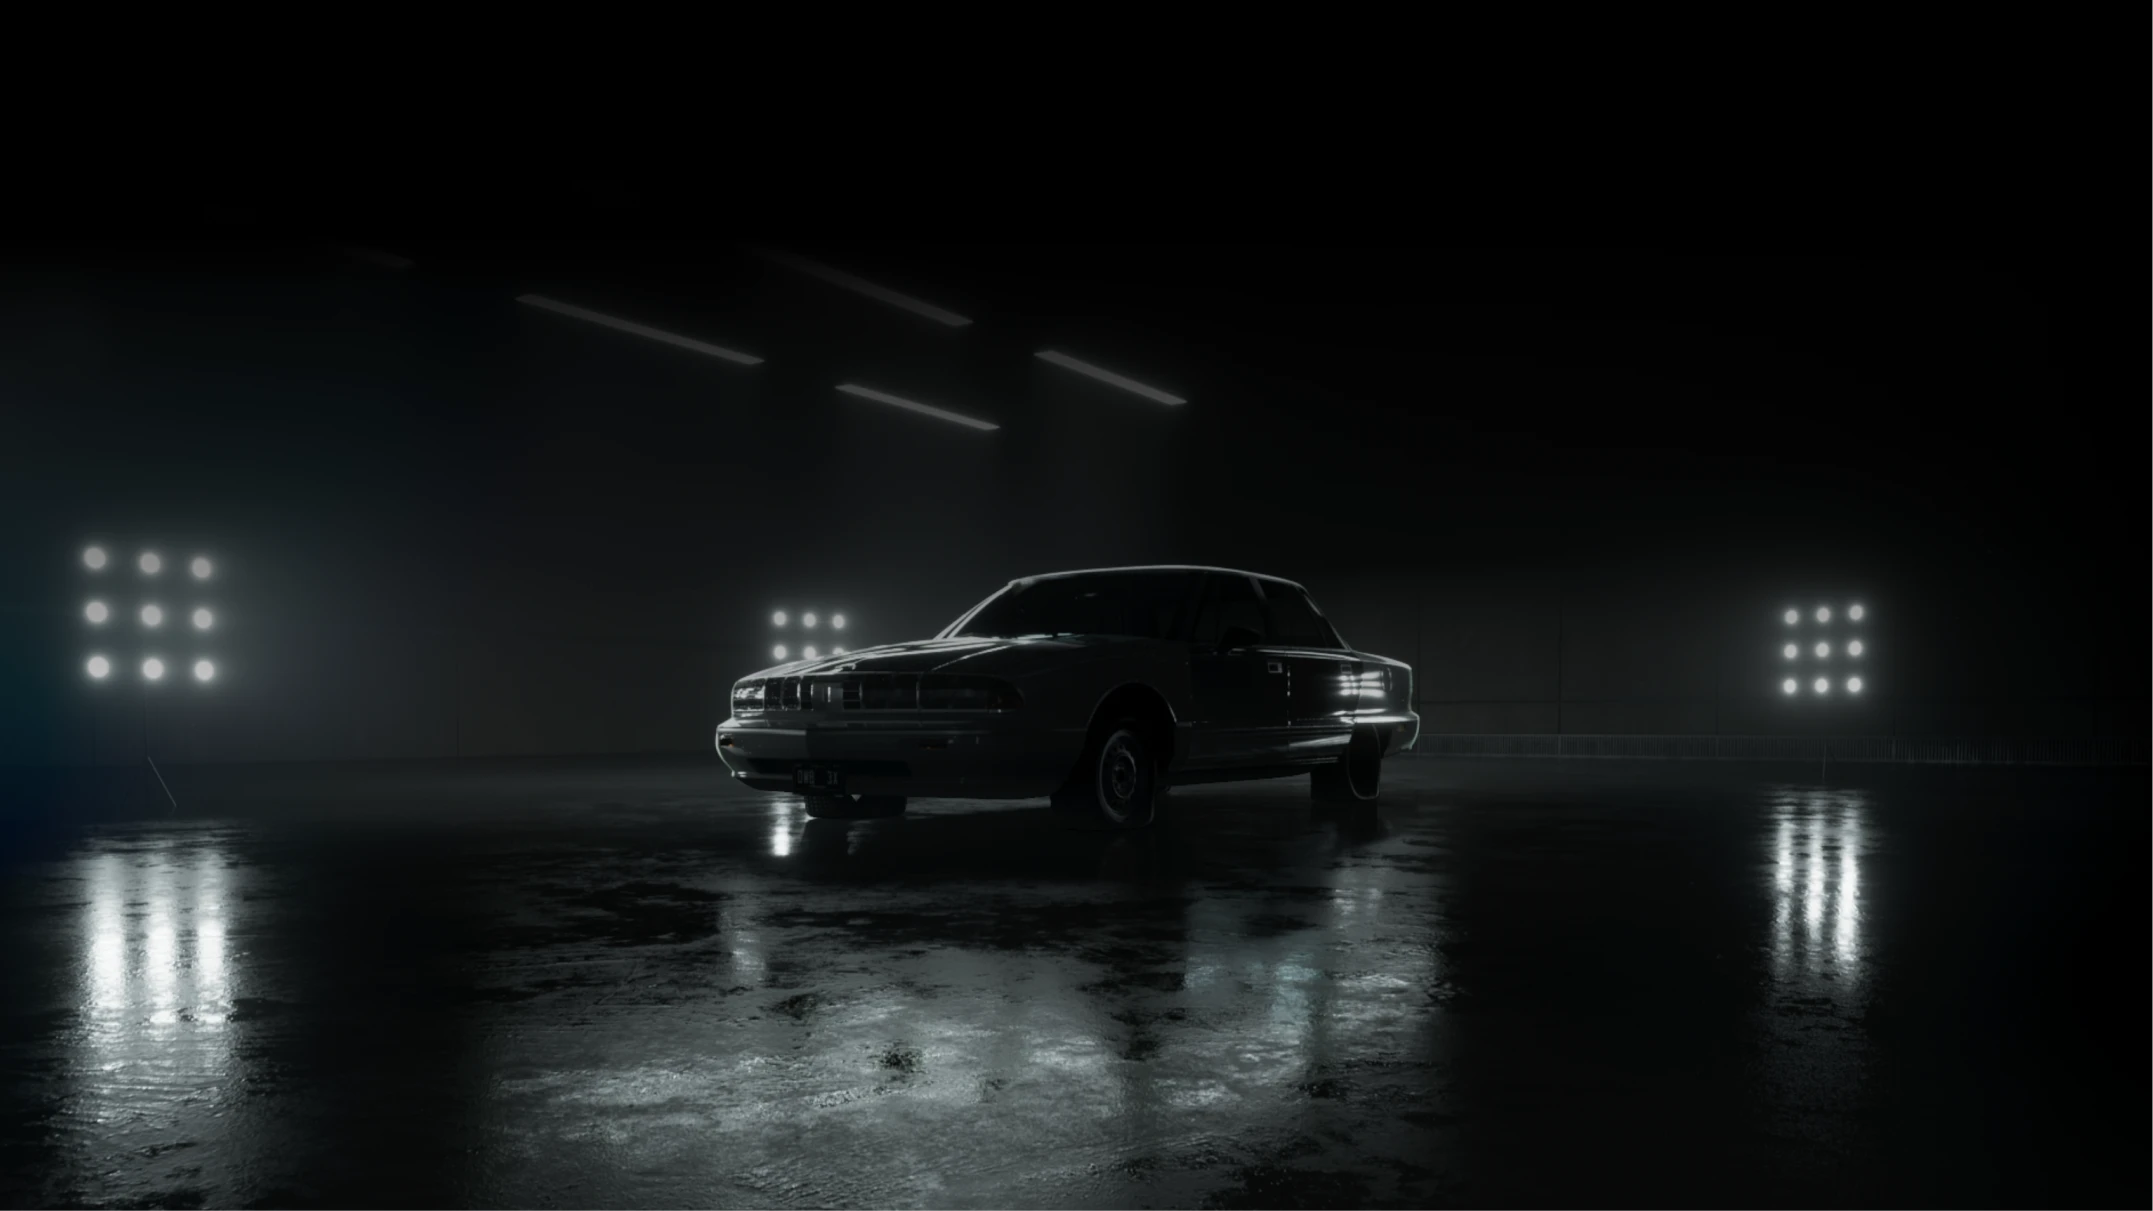 3 quarters hero shot of retro-futuristic sedan in a dark warehouse, spot lit from multiple angles